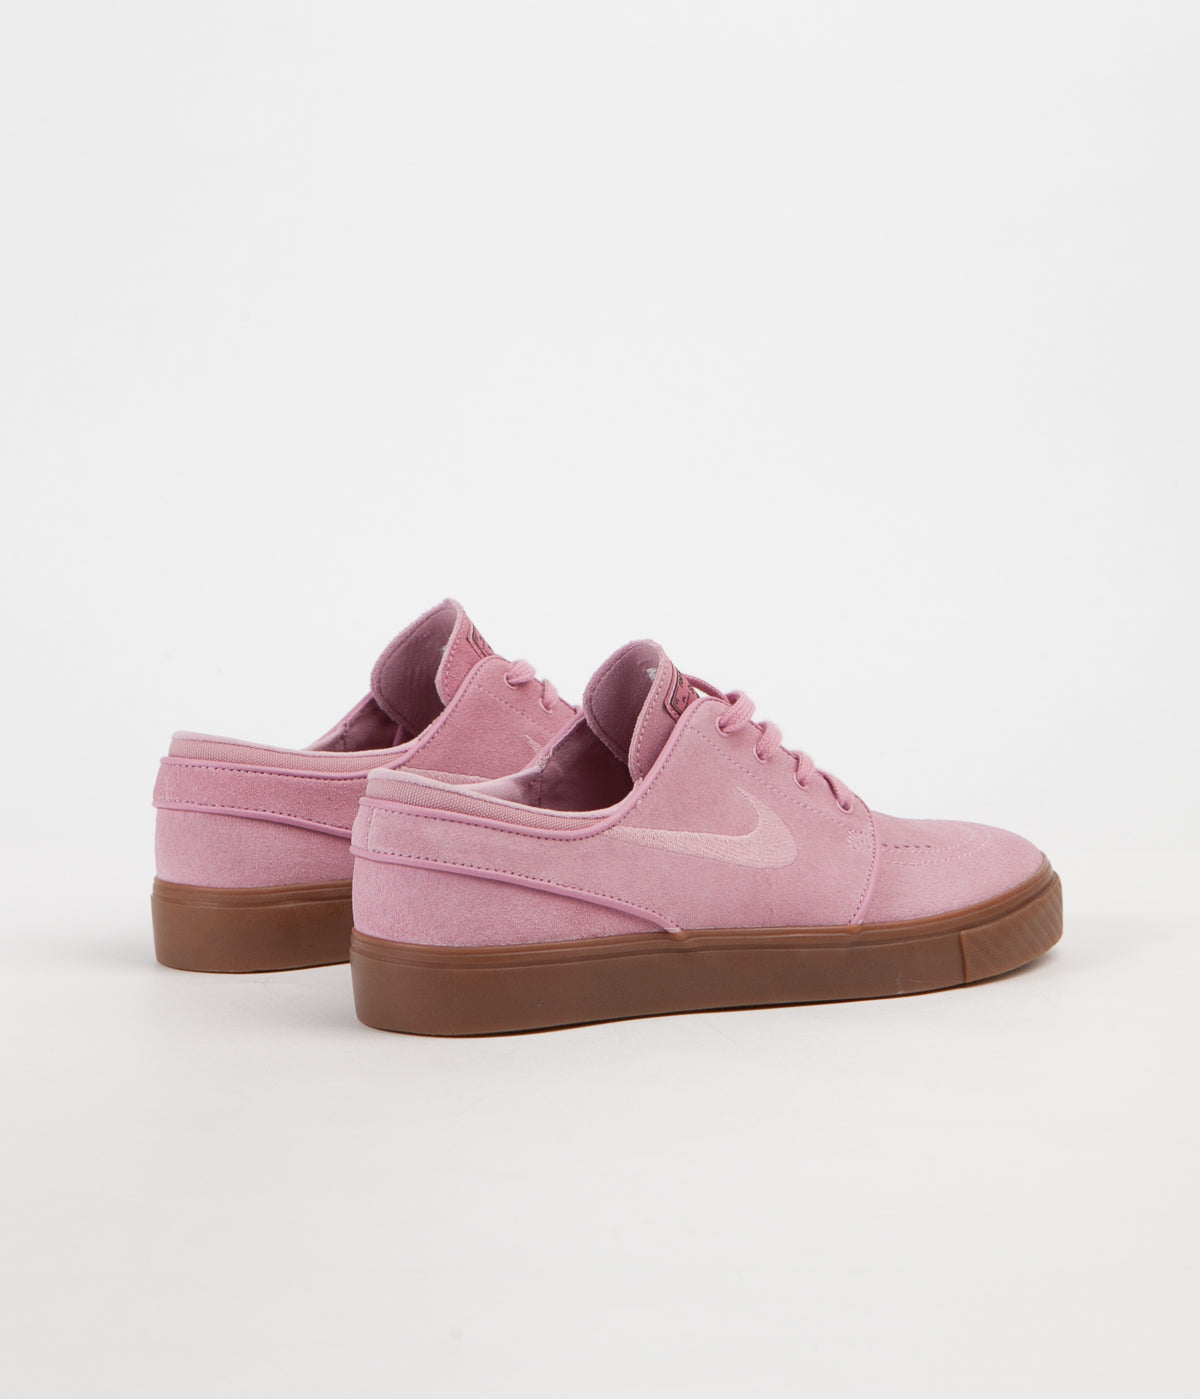 Nike SB Stefan Janoski Shoes - Elemental Pink / Elemental Pink - Sequo ...